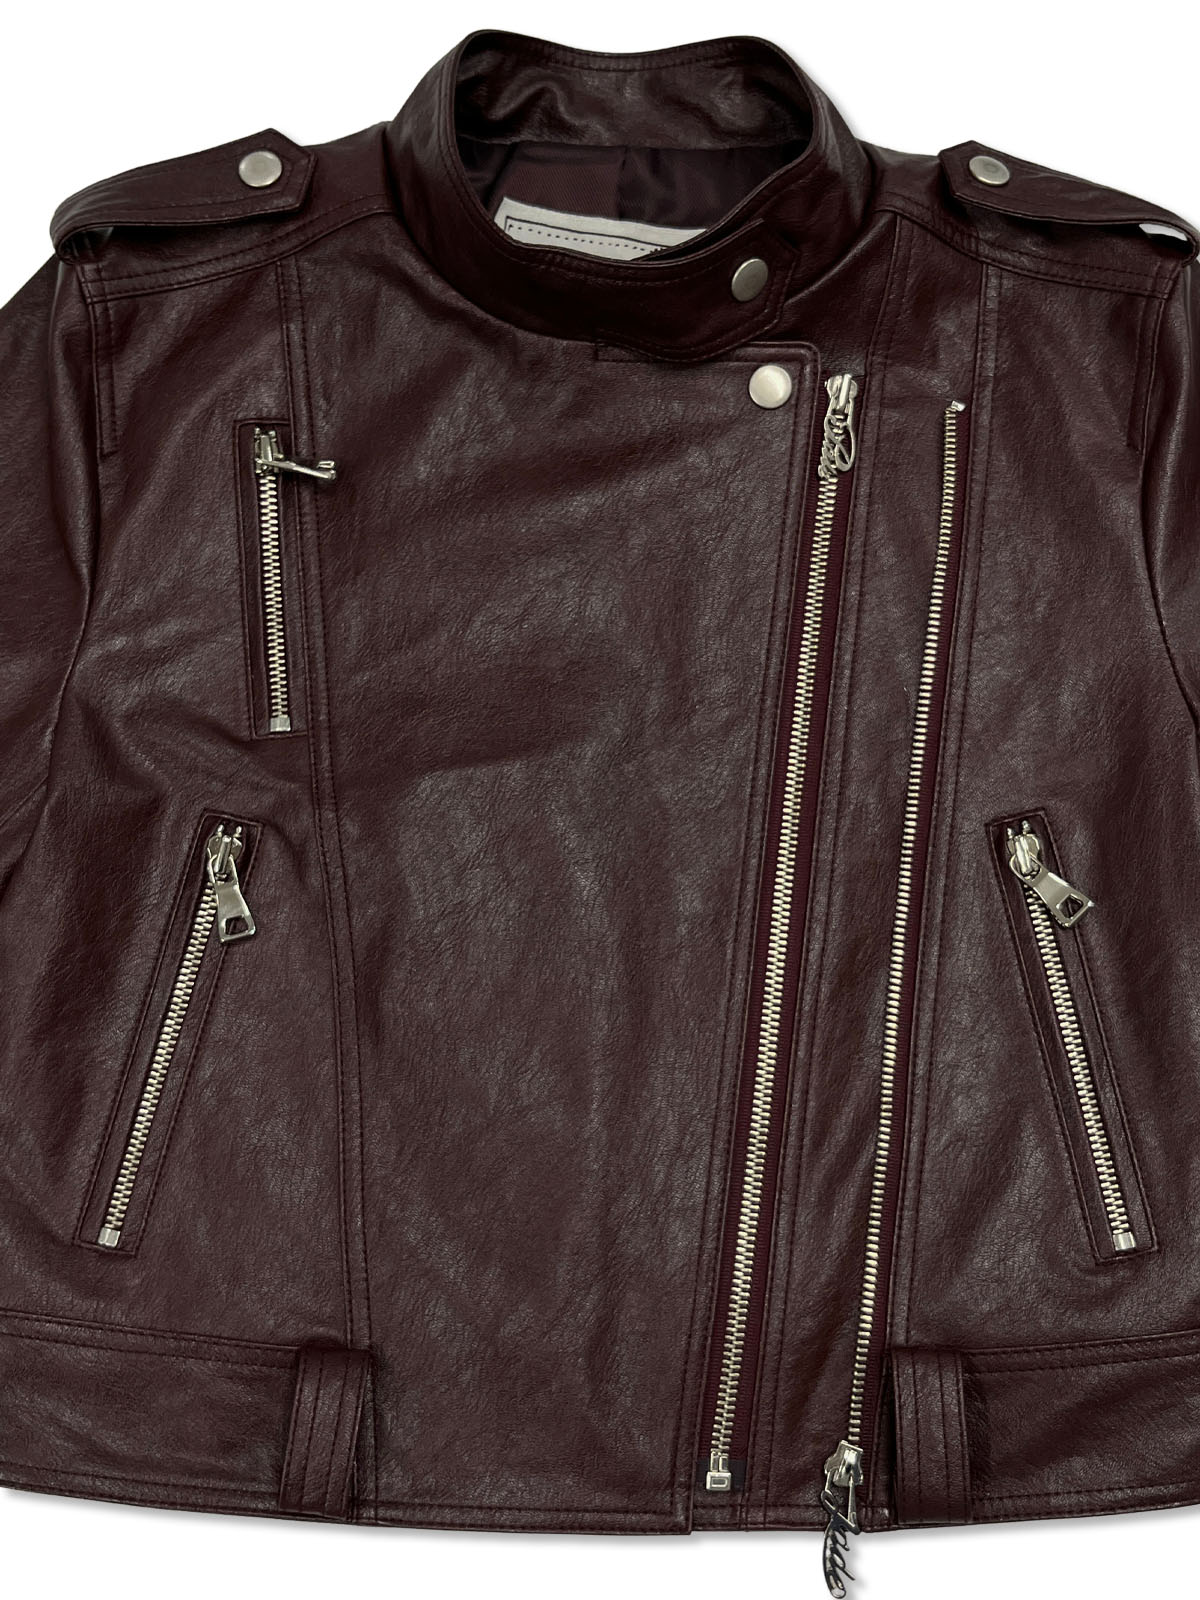 Barrett Leather Jacket - burgundy